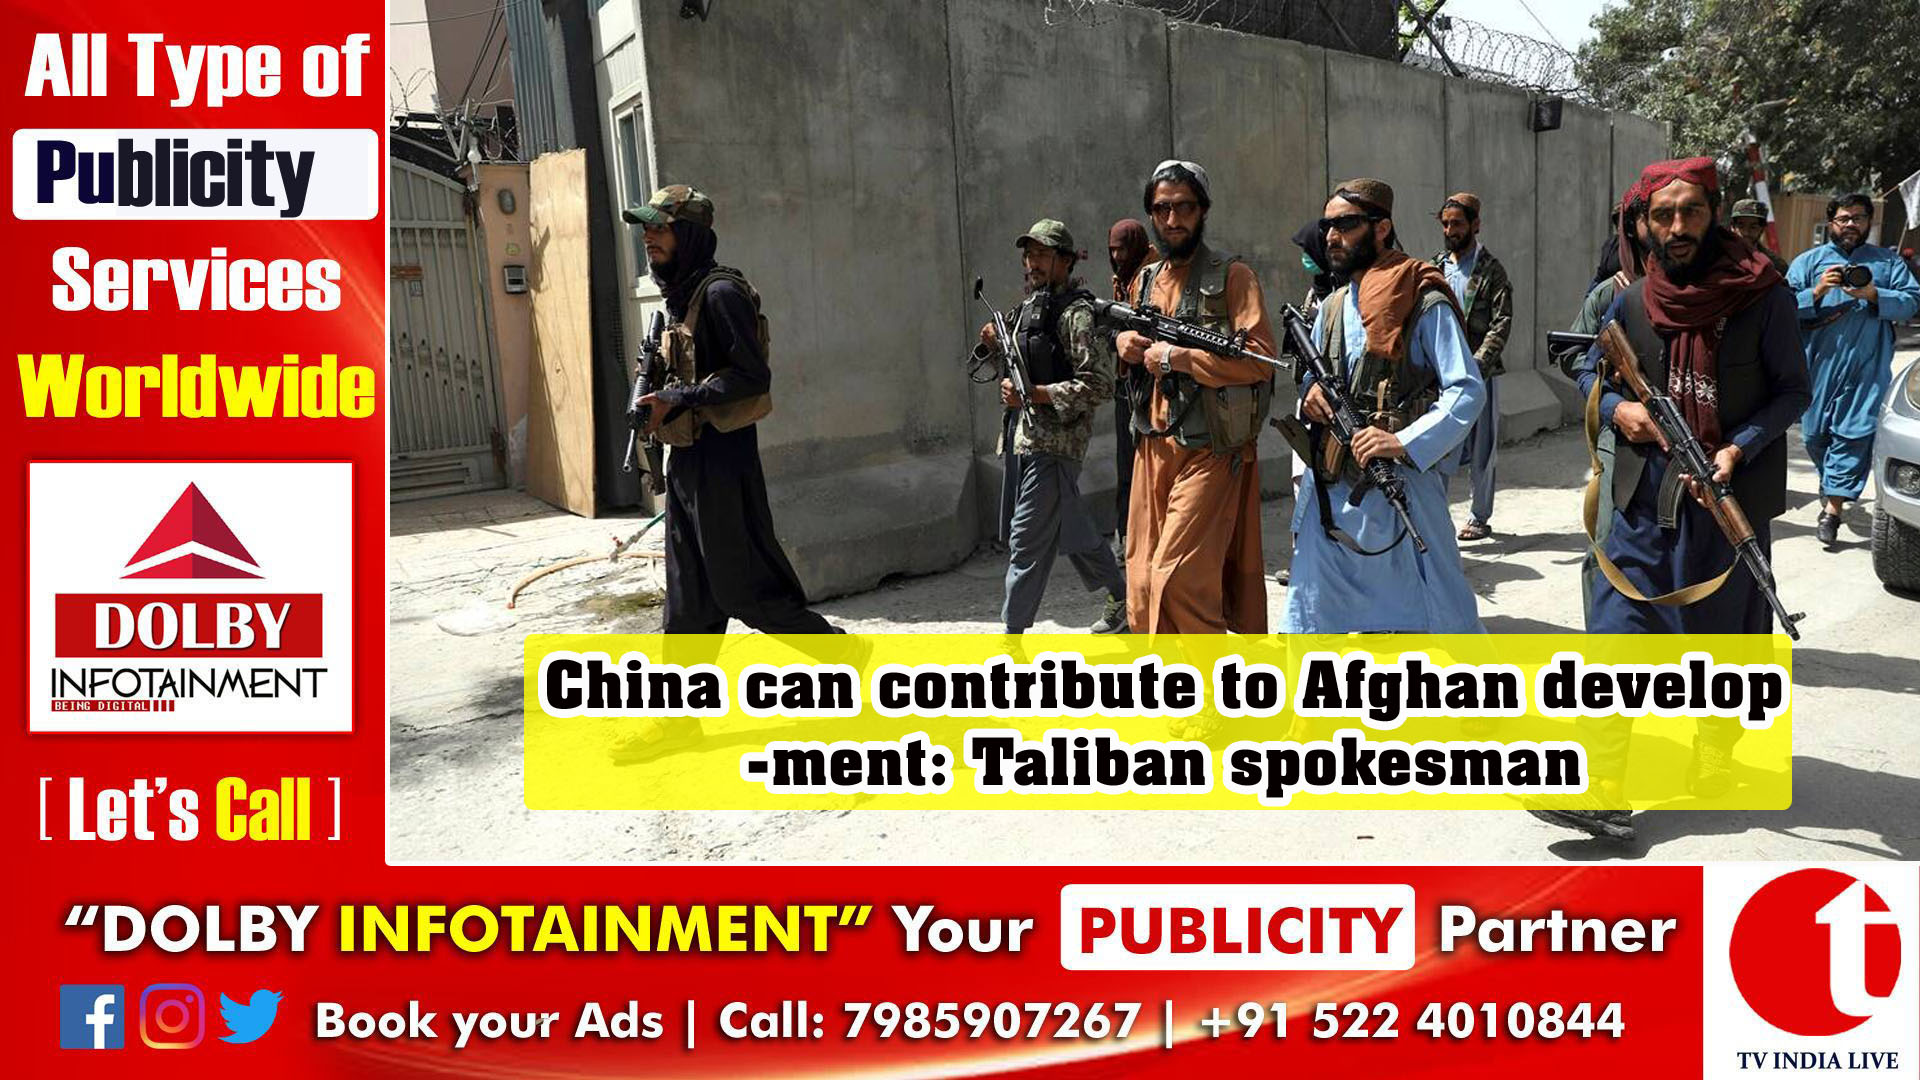 China can contribute to Afghan development: Taliban spokesman